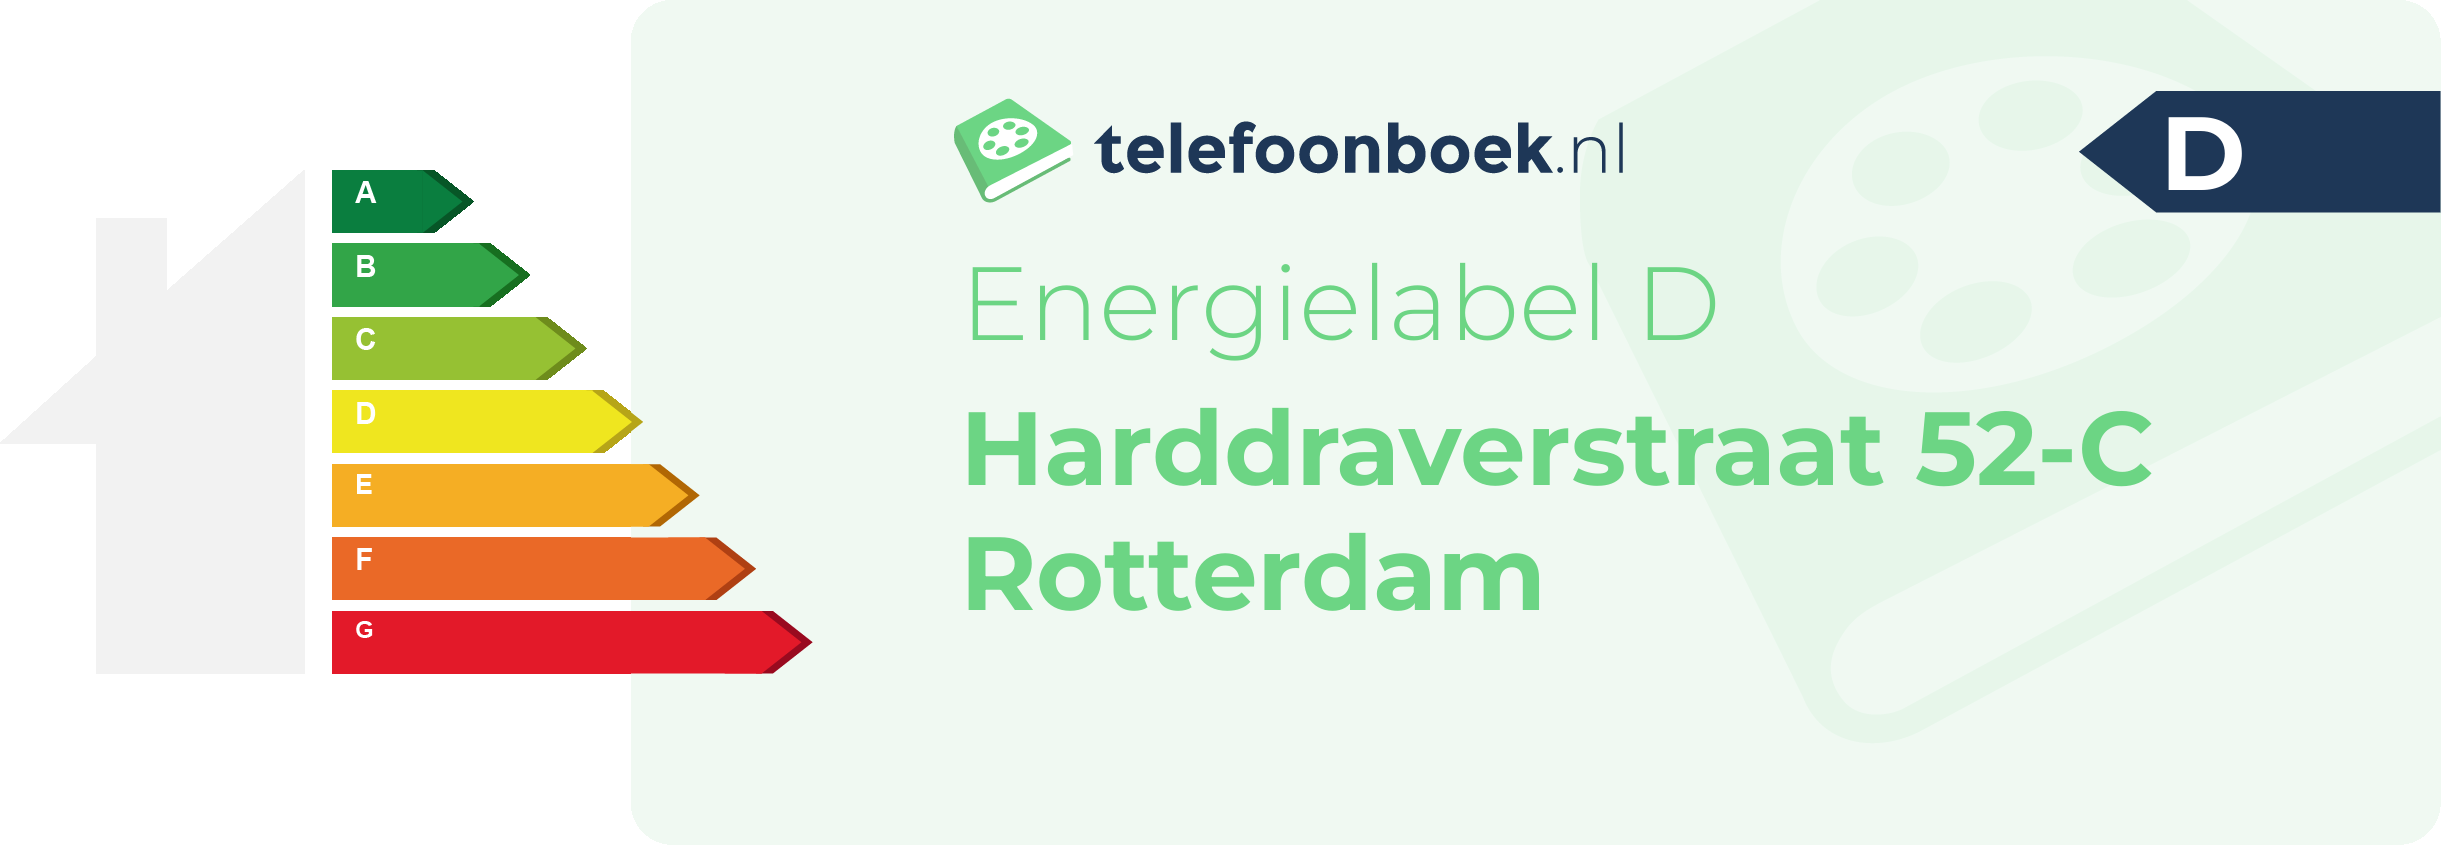 Energielabel Harddraverstraat 52-C Rotterdam